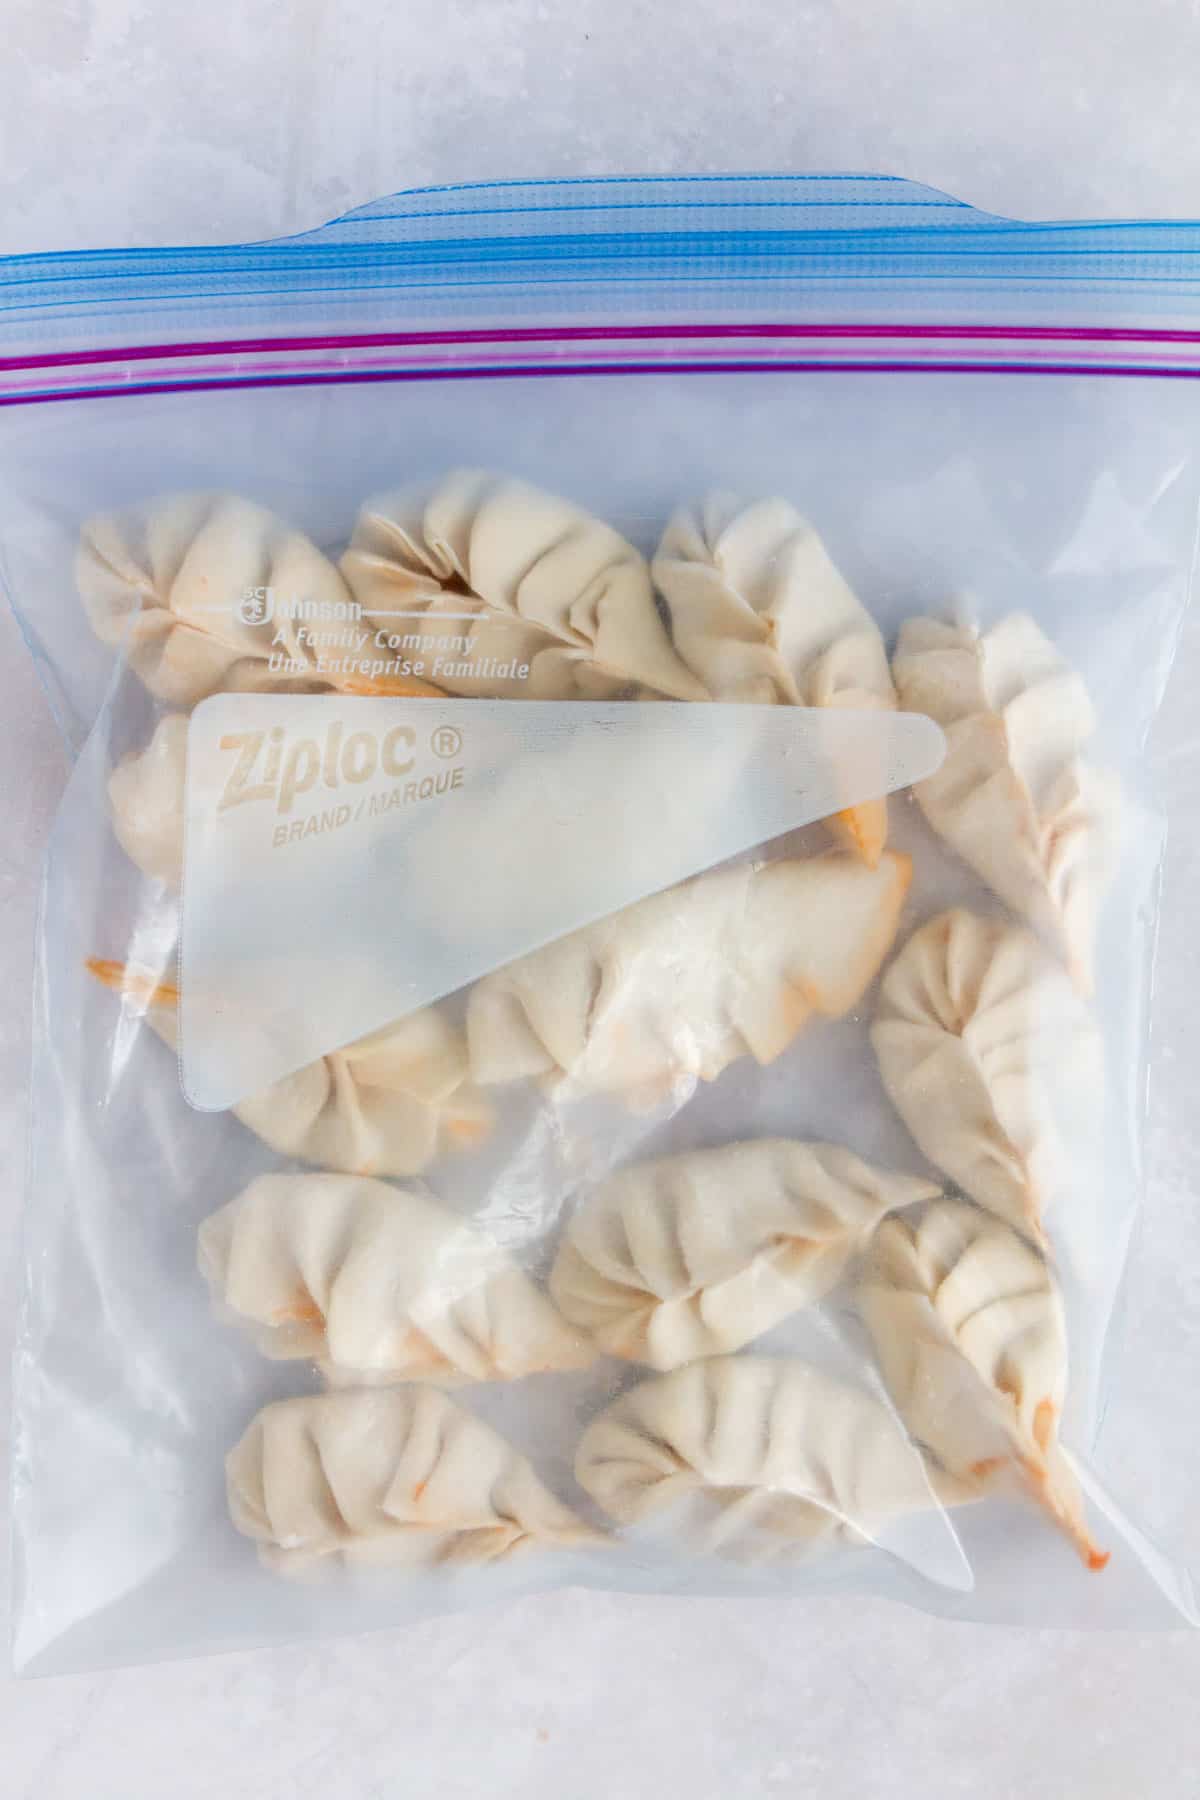 Frozen dumplings in a ziploc bag.